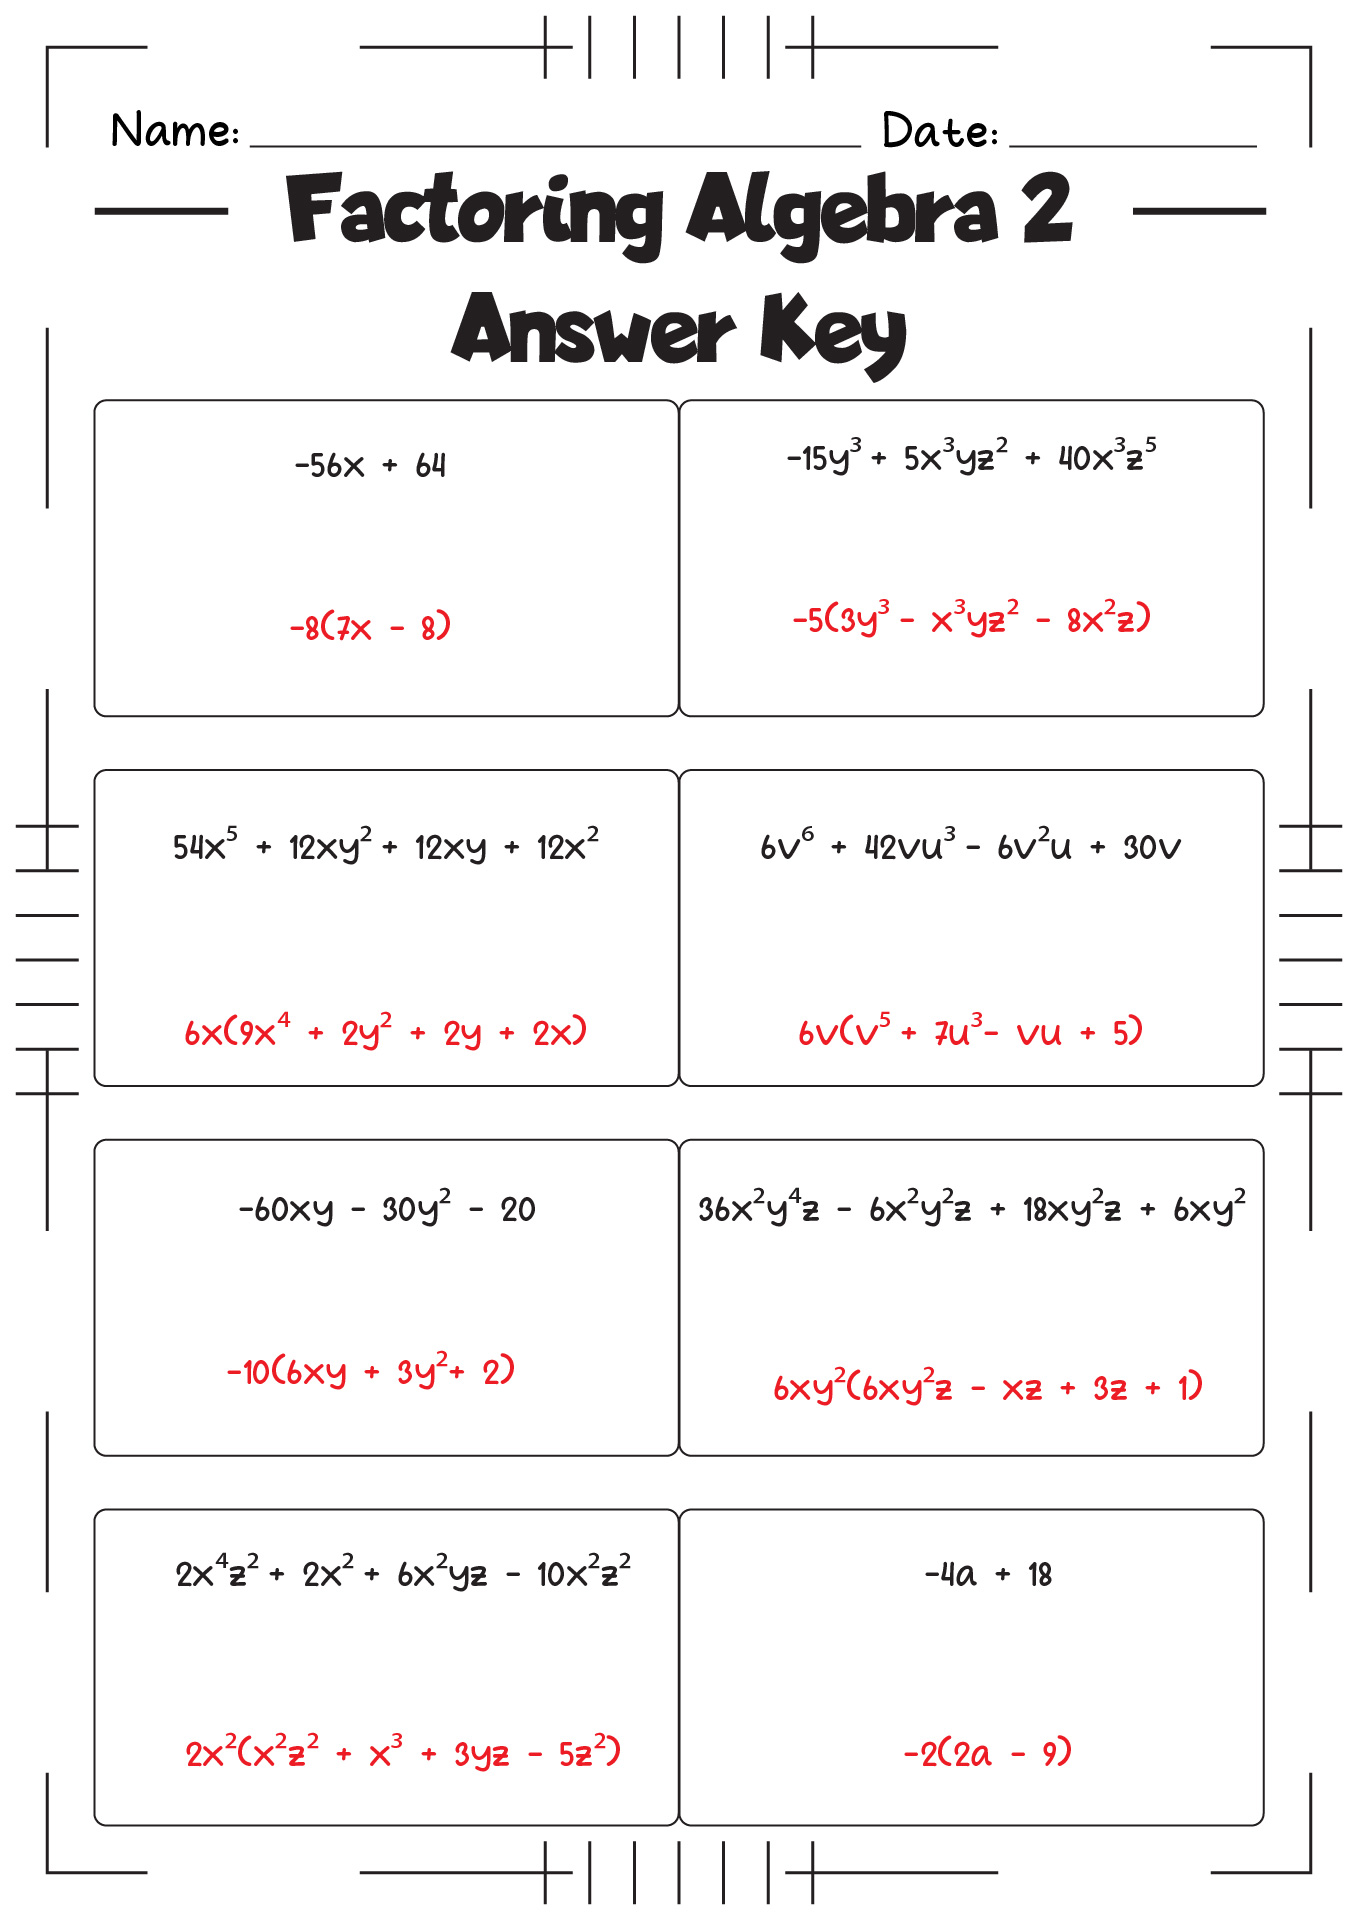 Factoring Worksheet Algebra 2 Answer Key